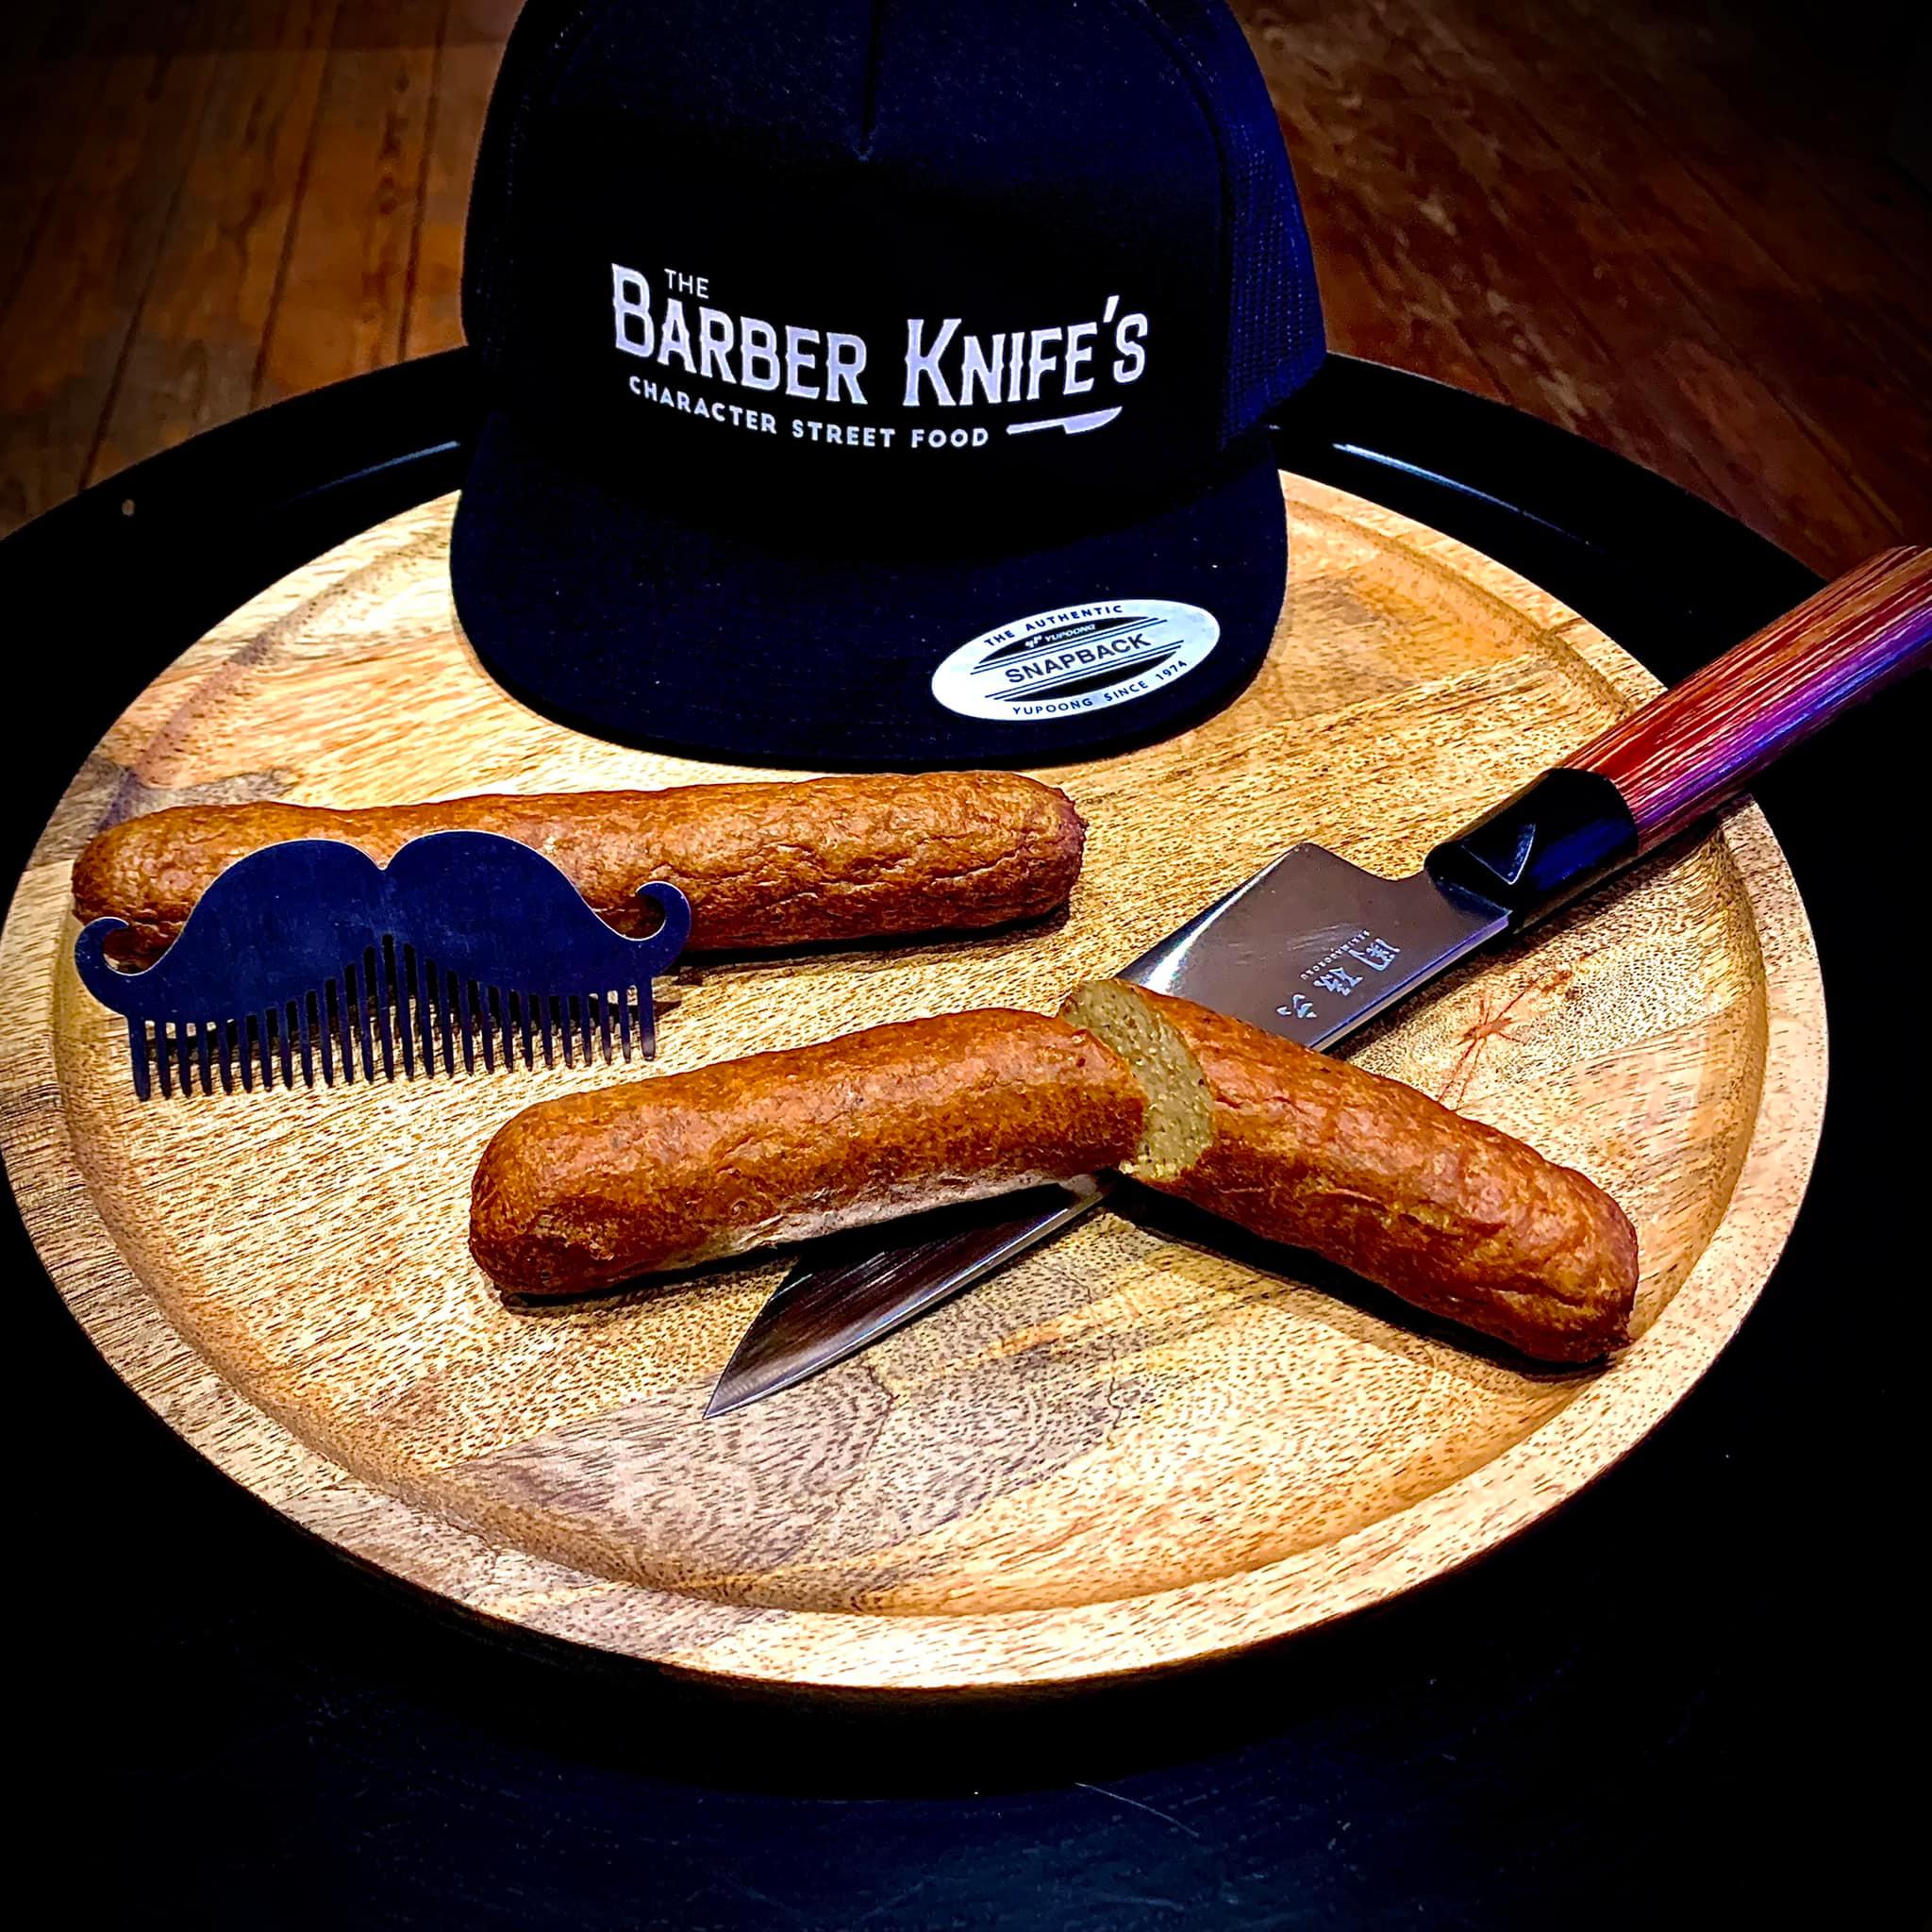 The Barber Knife's